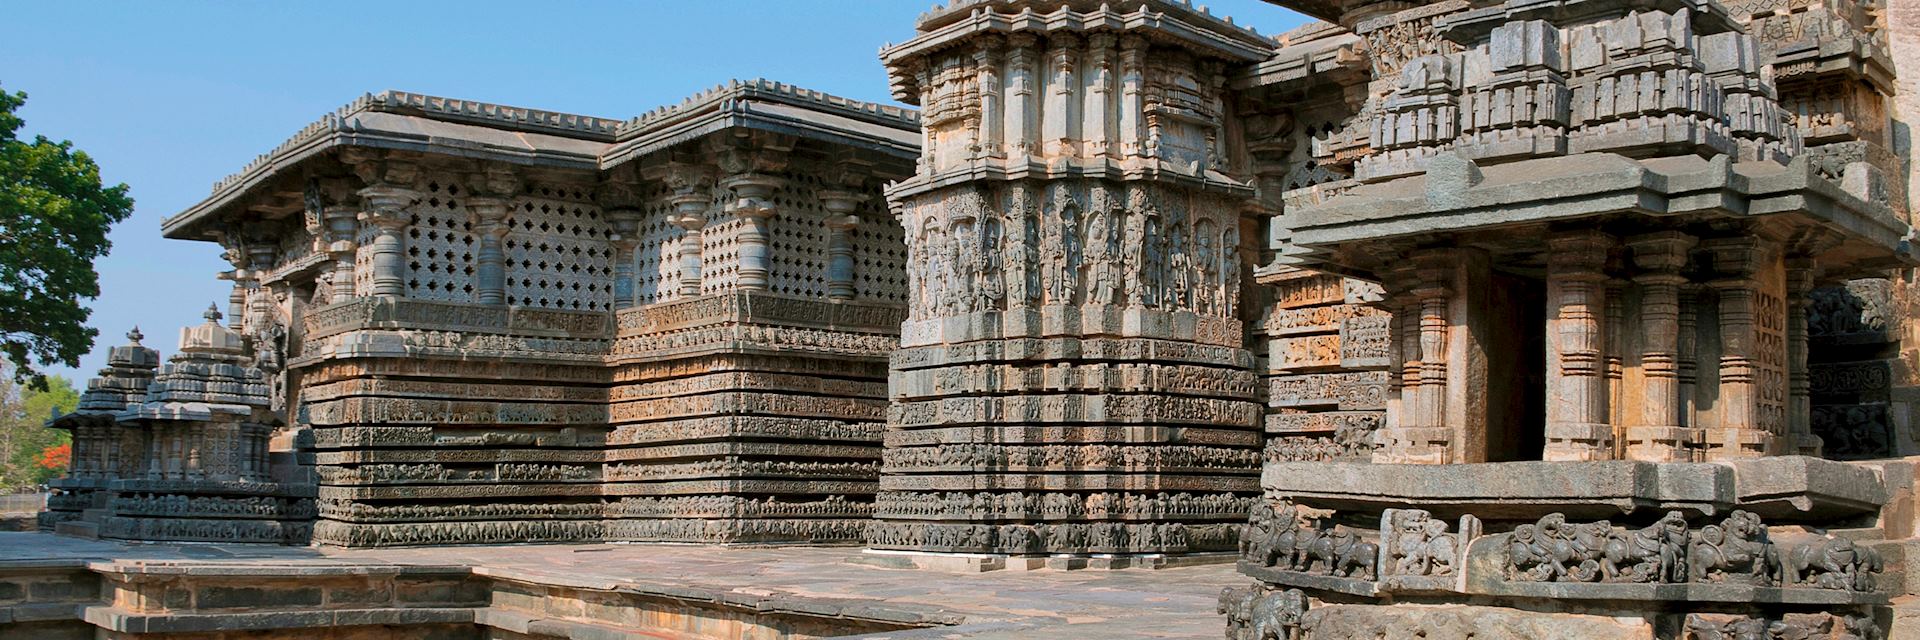 Hoysaleshwara Temple, Halebid